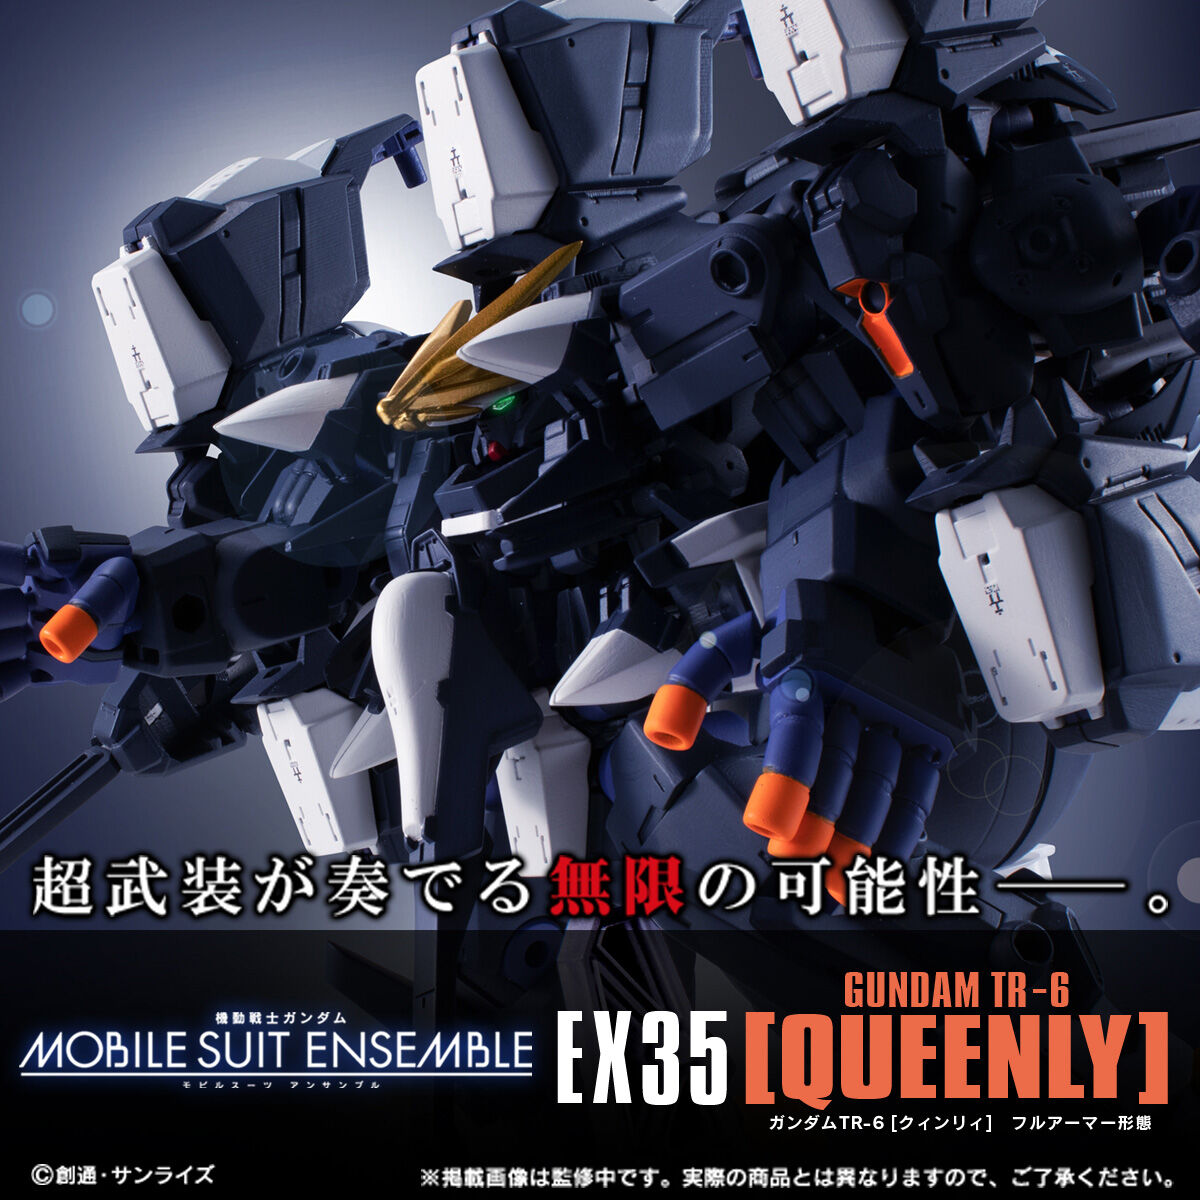 MS Ensemble EX35 RX-124(ARZ-124QN) Gundam TR-6[Queenly]Full-Armor